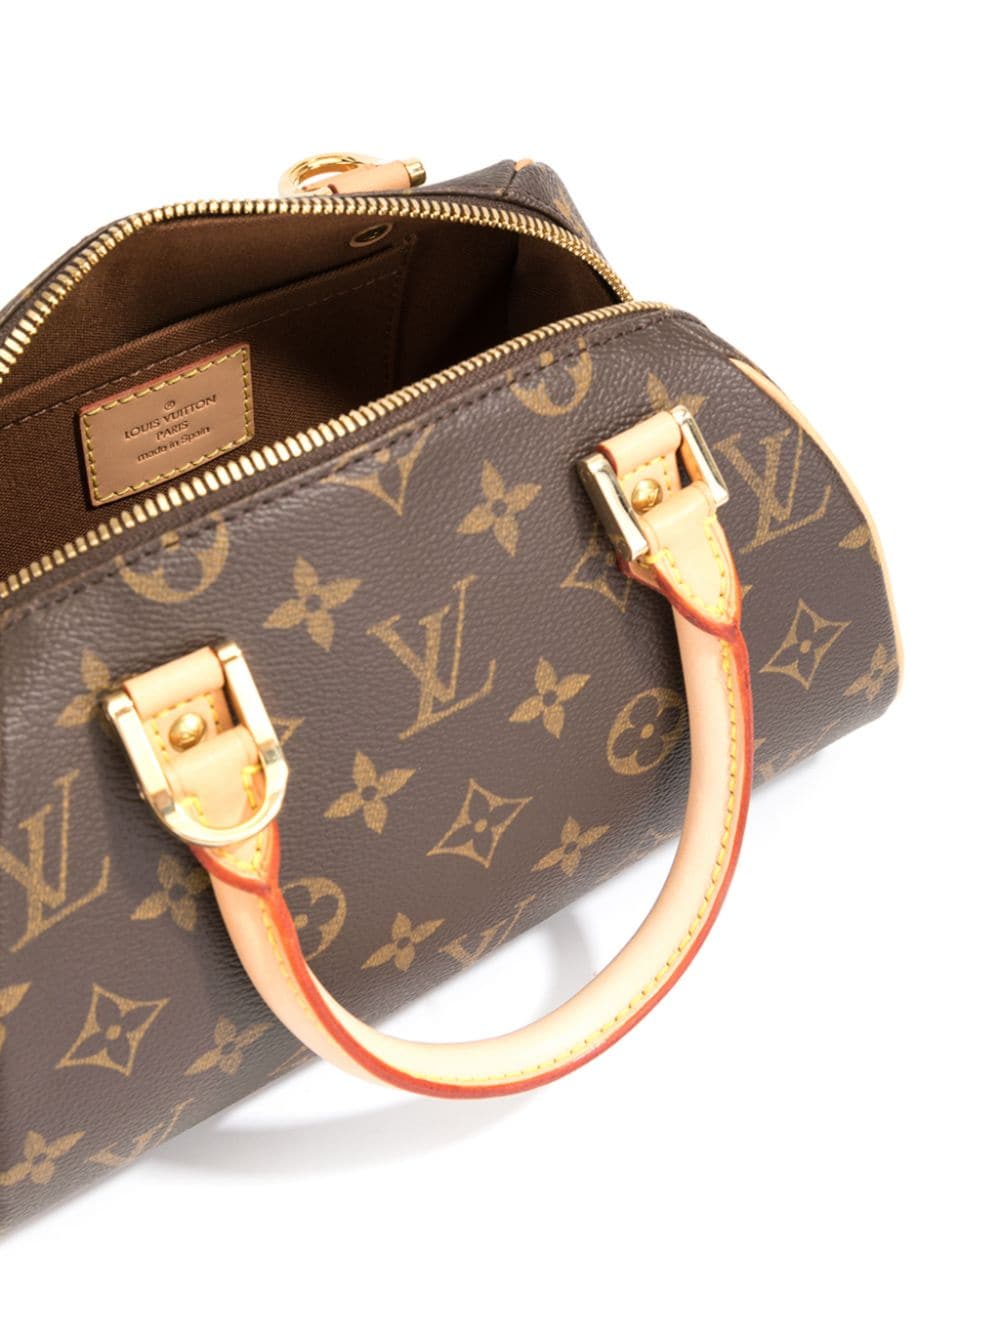 Louis Vuitton Ribera Mini Handbag - Farfetch